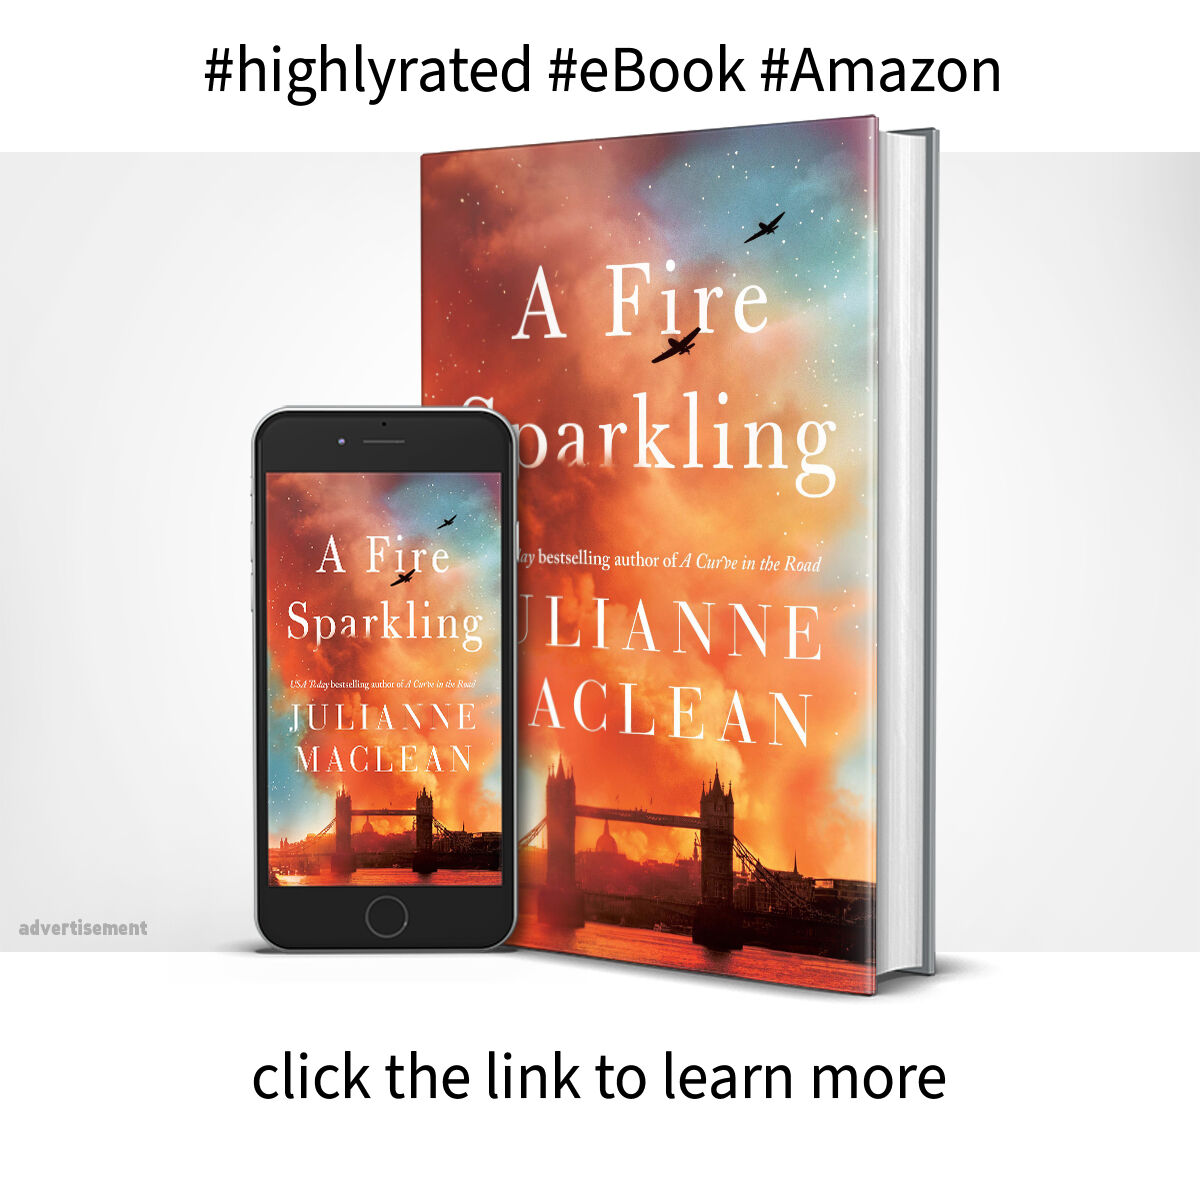 A Fire Sparkling by Julianne MacLean amzn.to/3D5VNo2 #UnlimteBooks #HistoricalReads